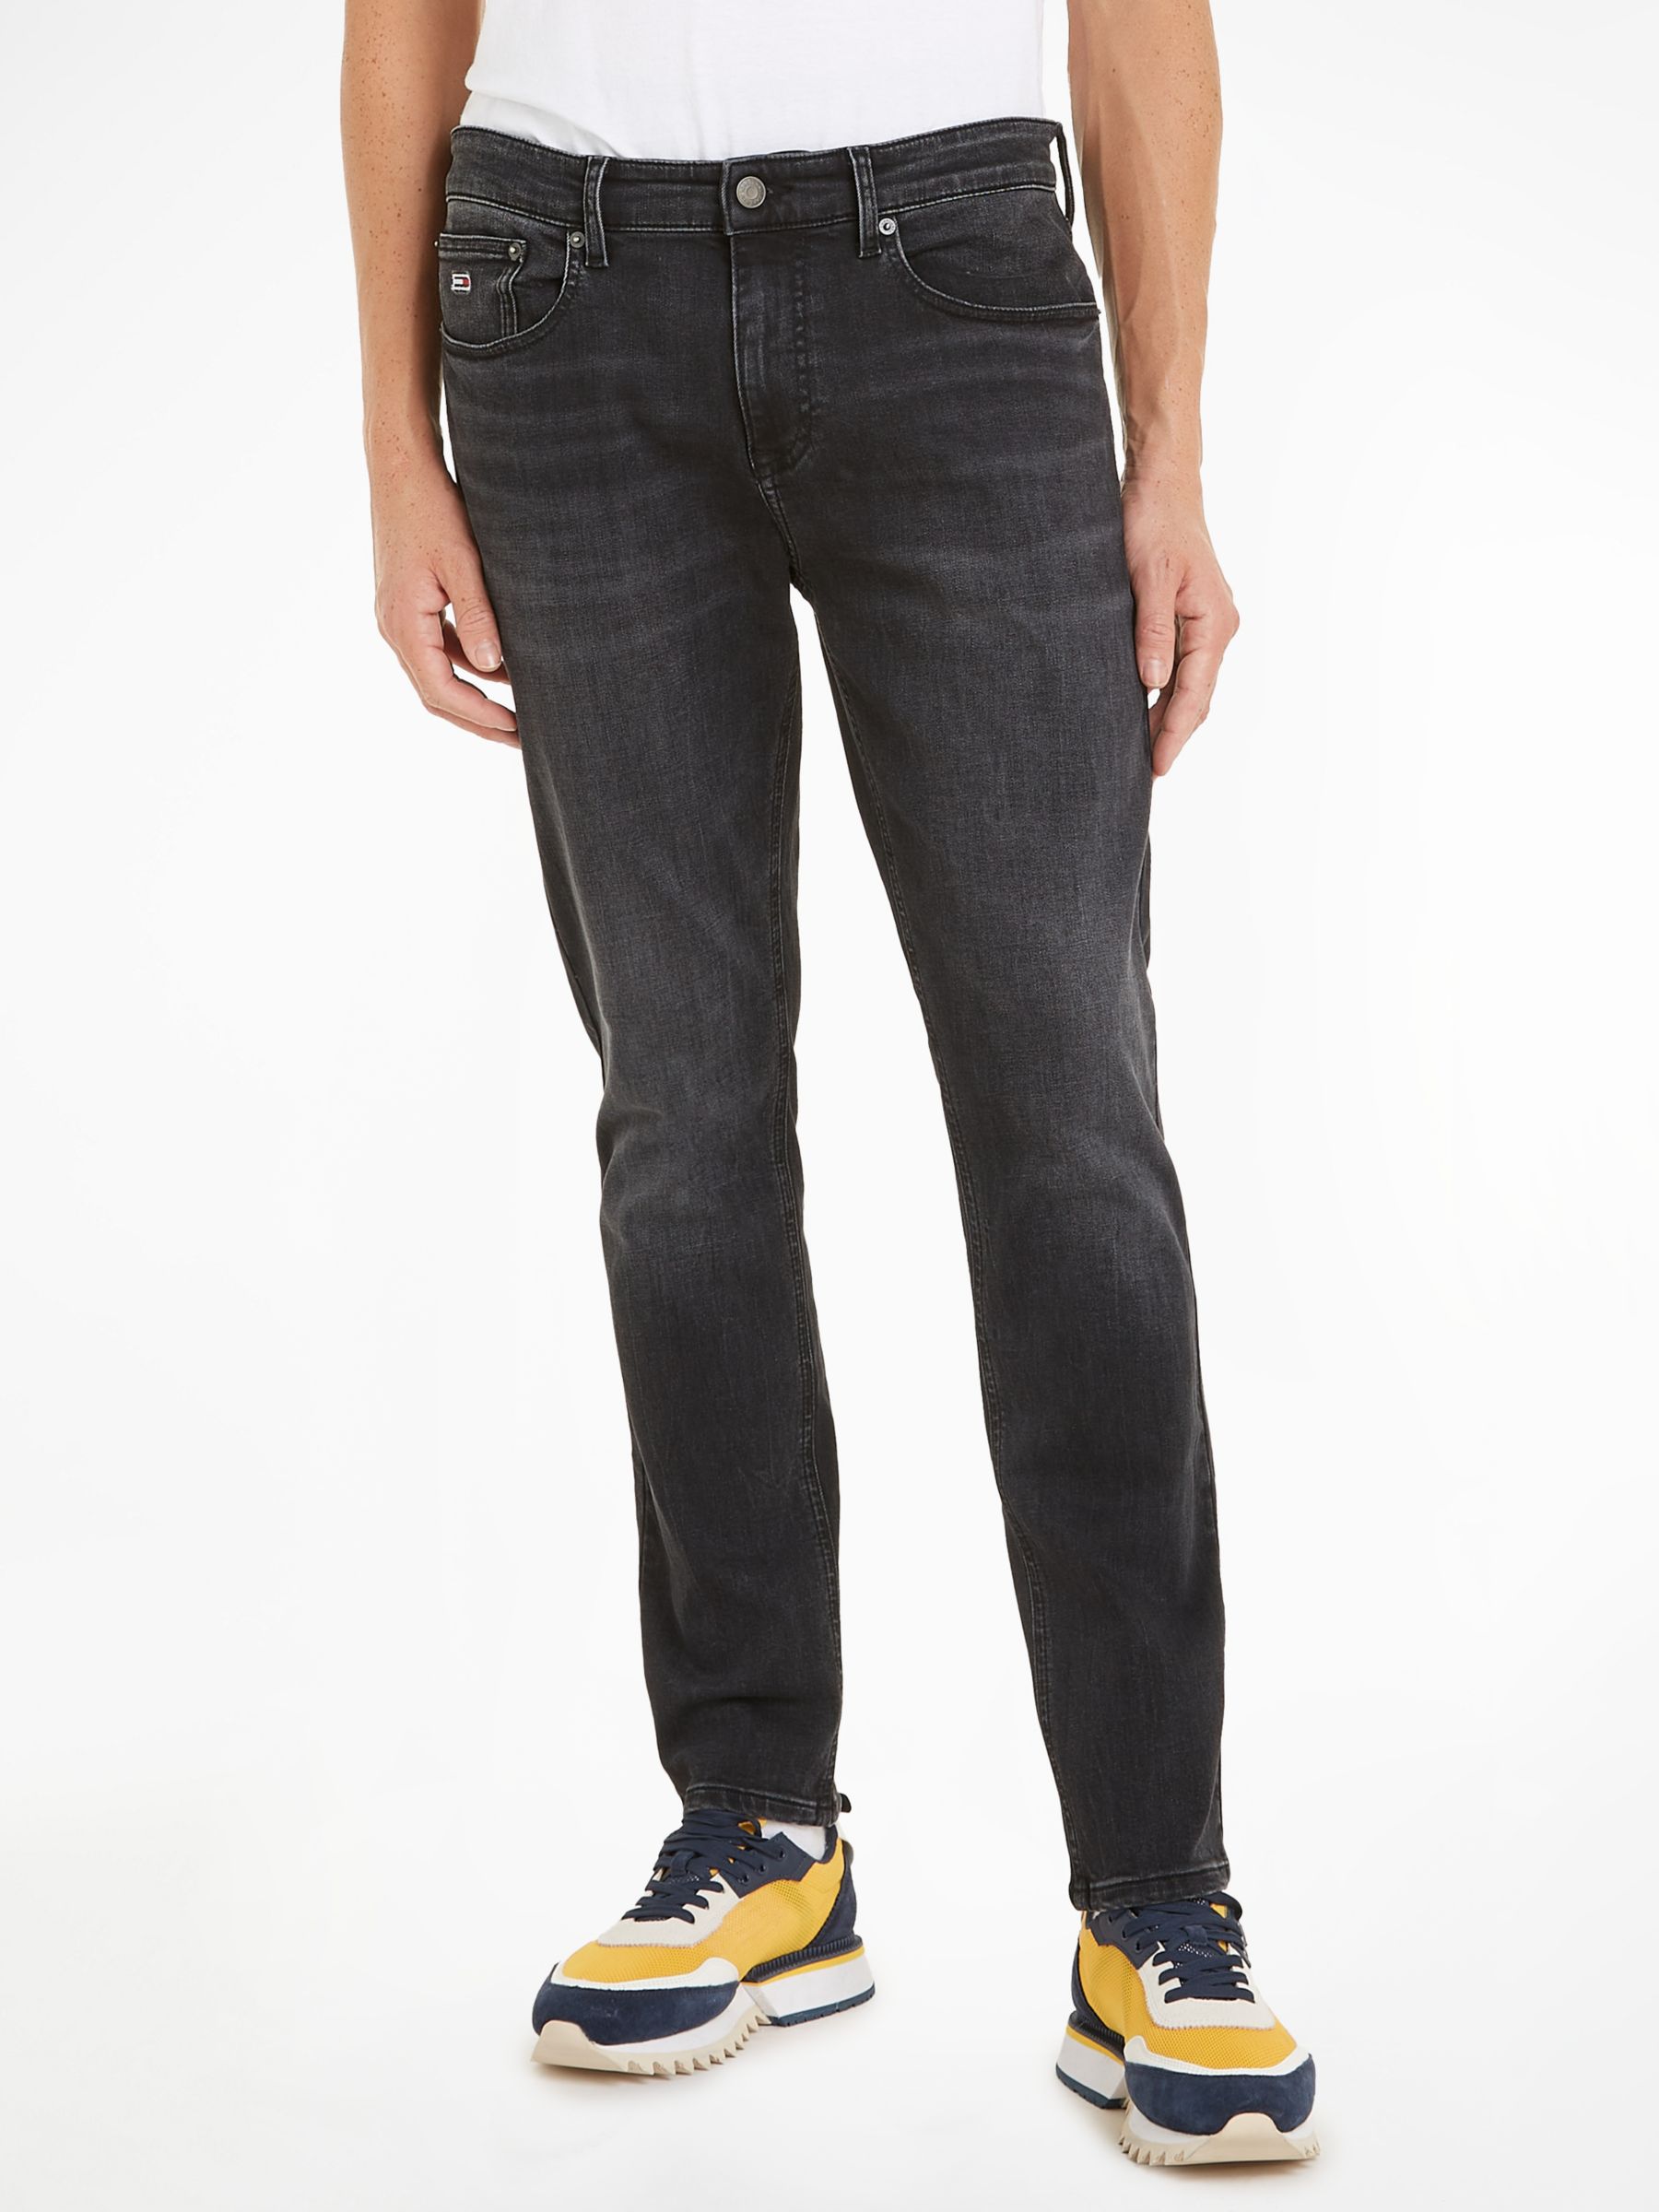 Tommy Jeans Austin Slim Fit Jeans, Black, 36S